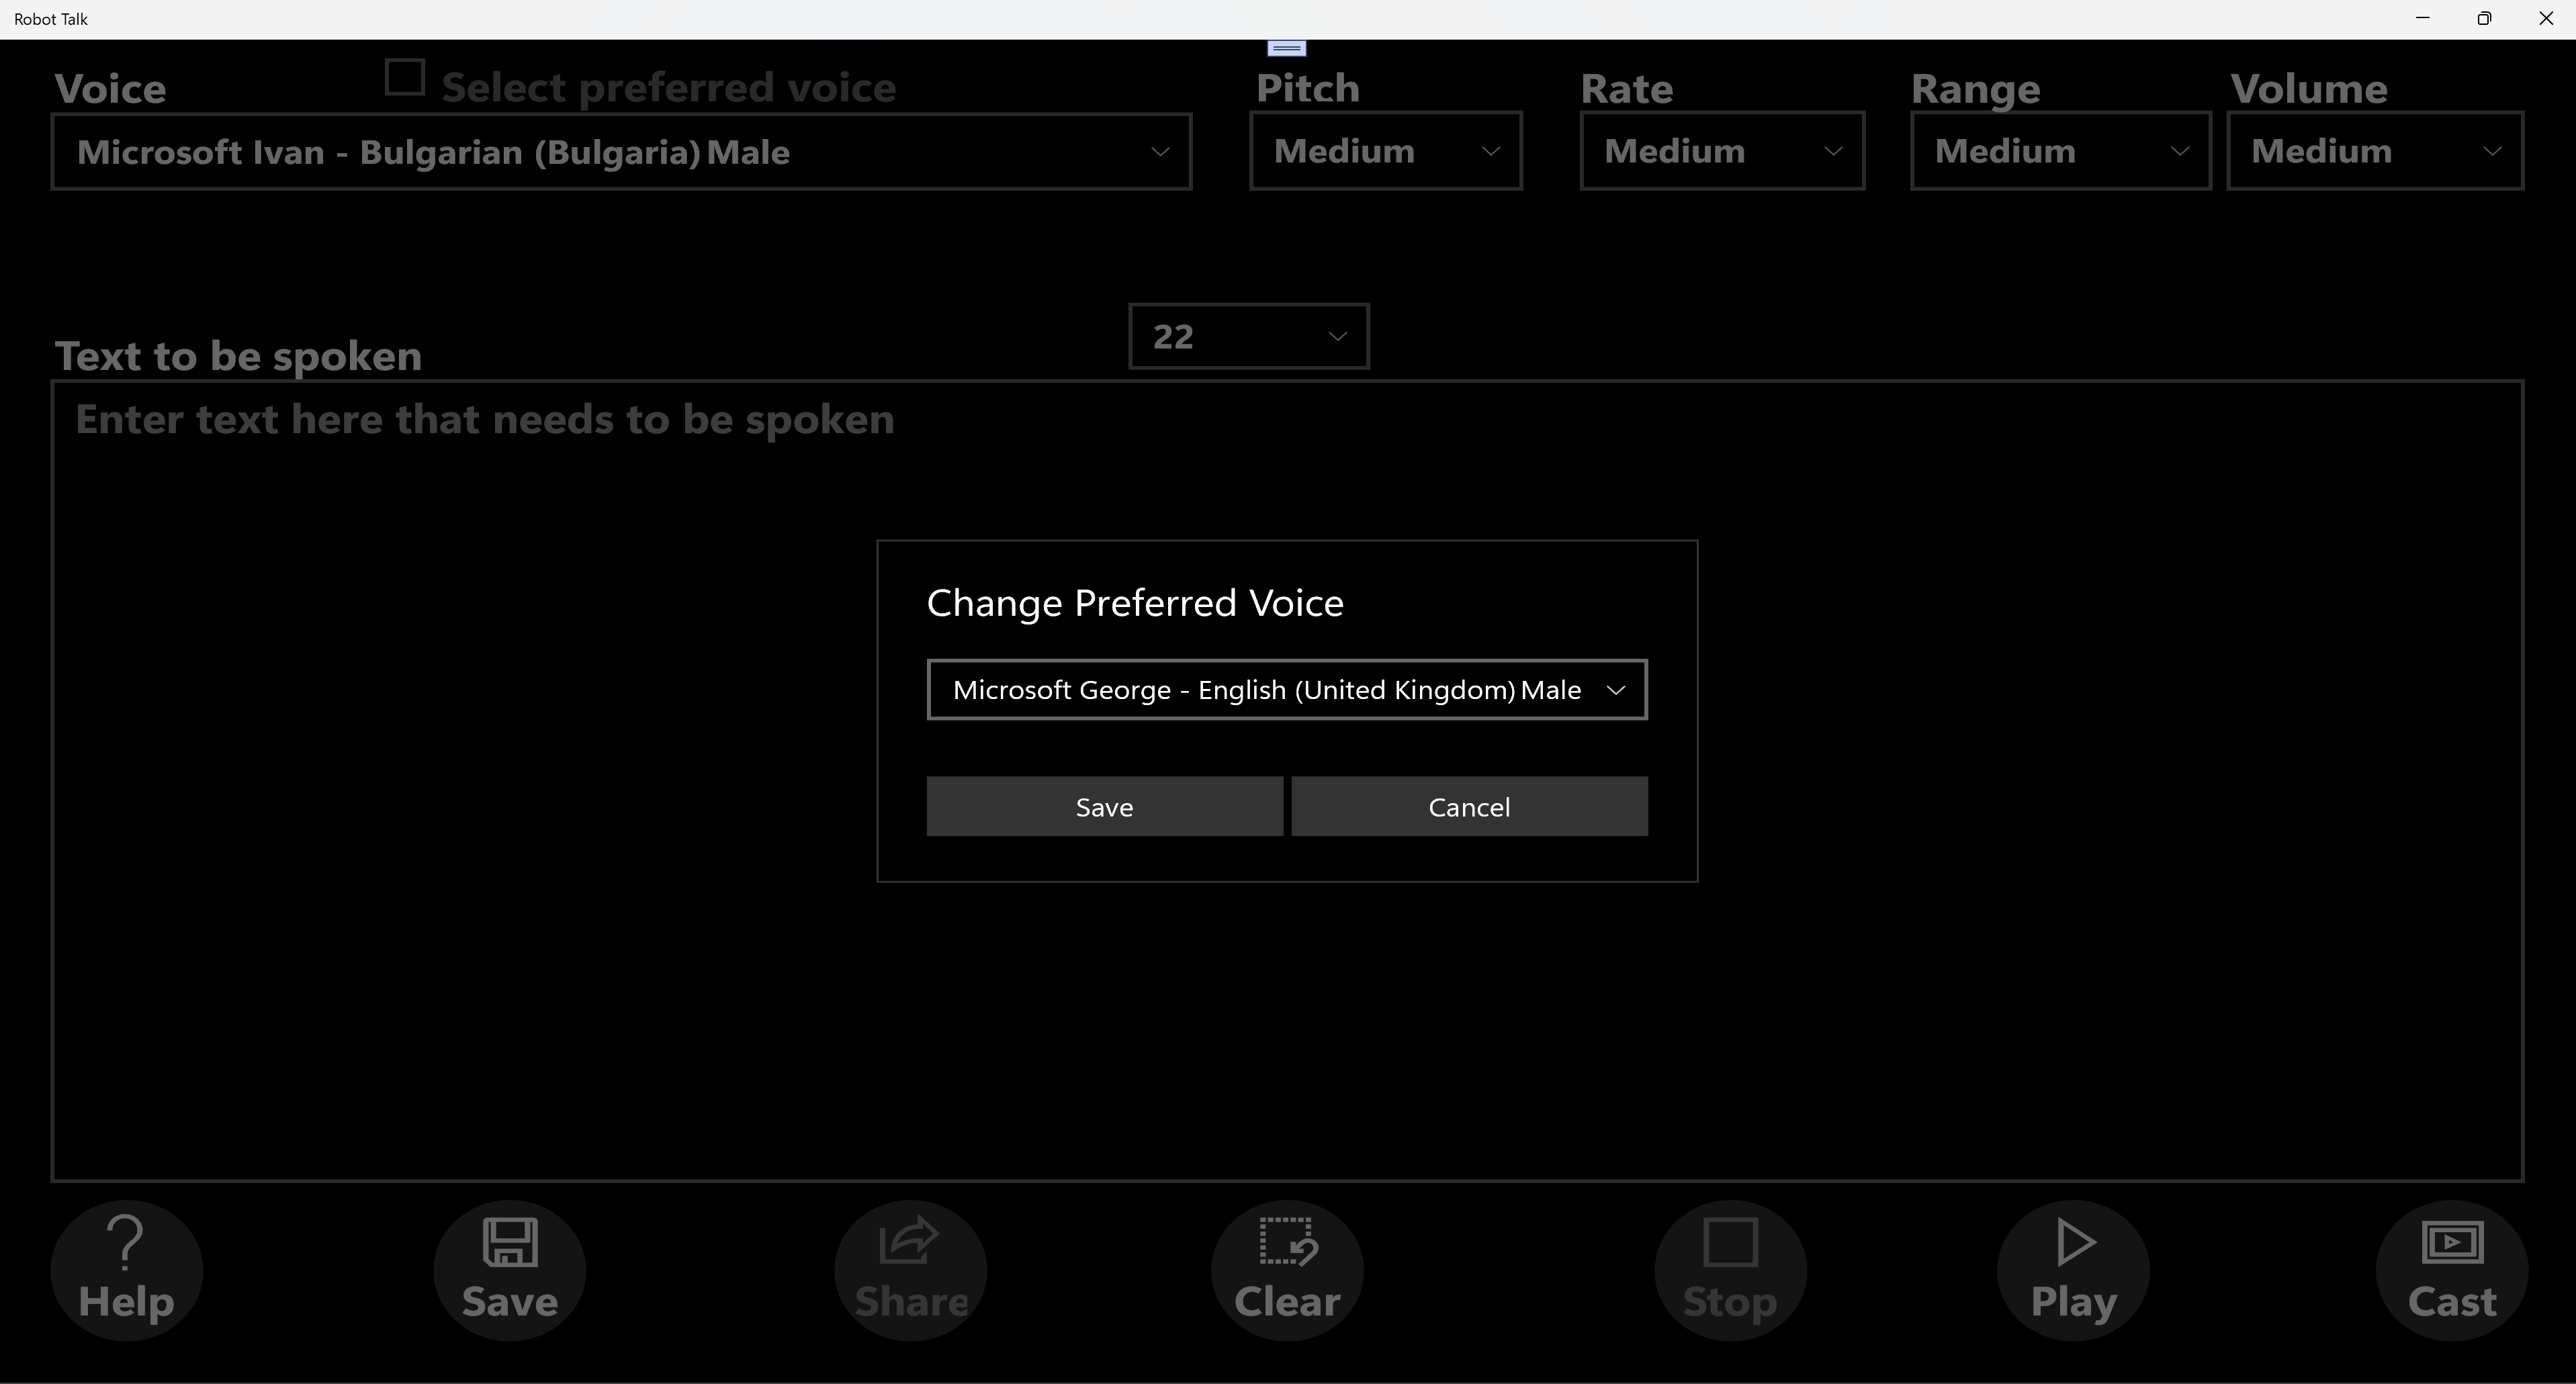 Main screen - changing Preferred Voice - Windows 10/11 - Dark Theme